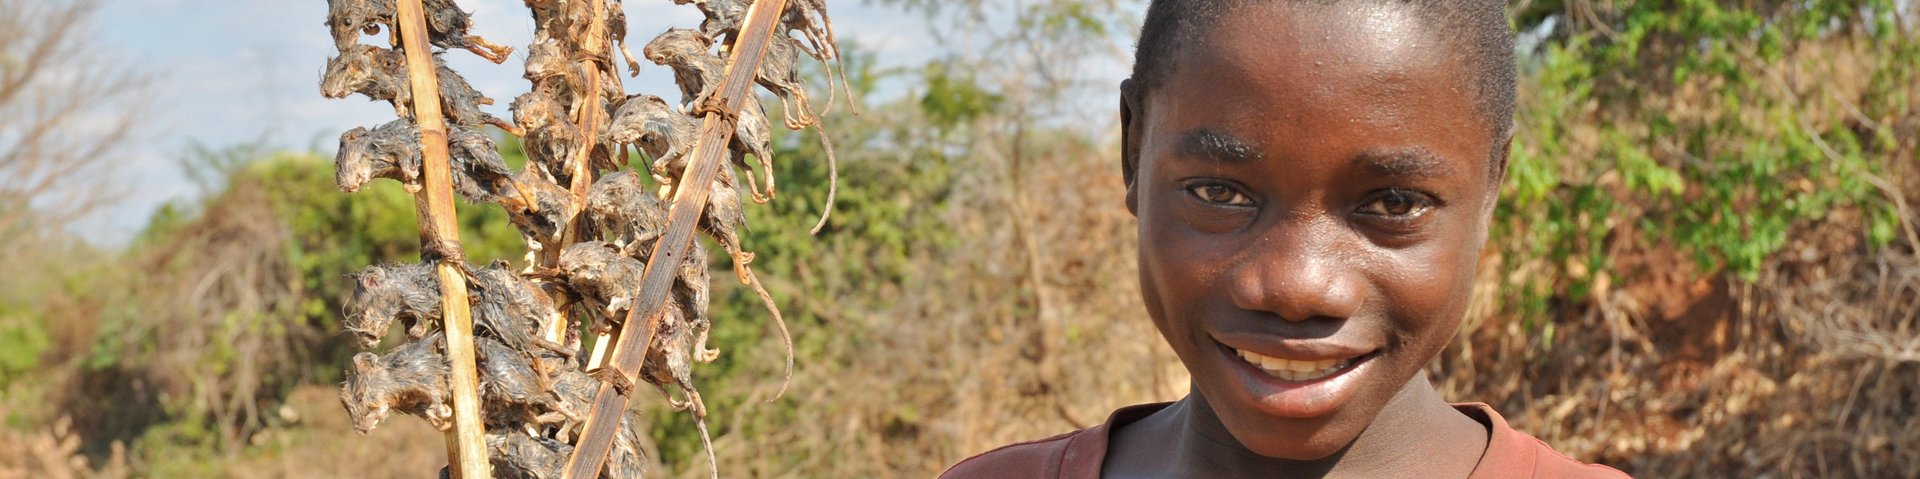 Junge in Mosambik lächelt in die Kamera